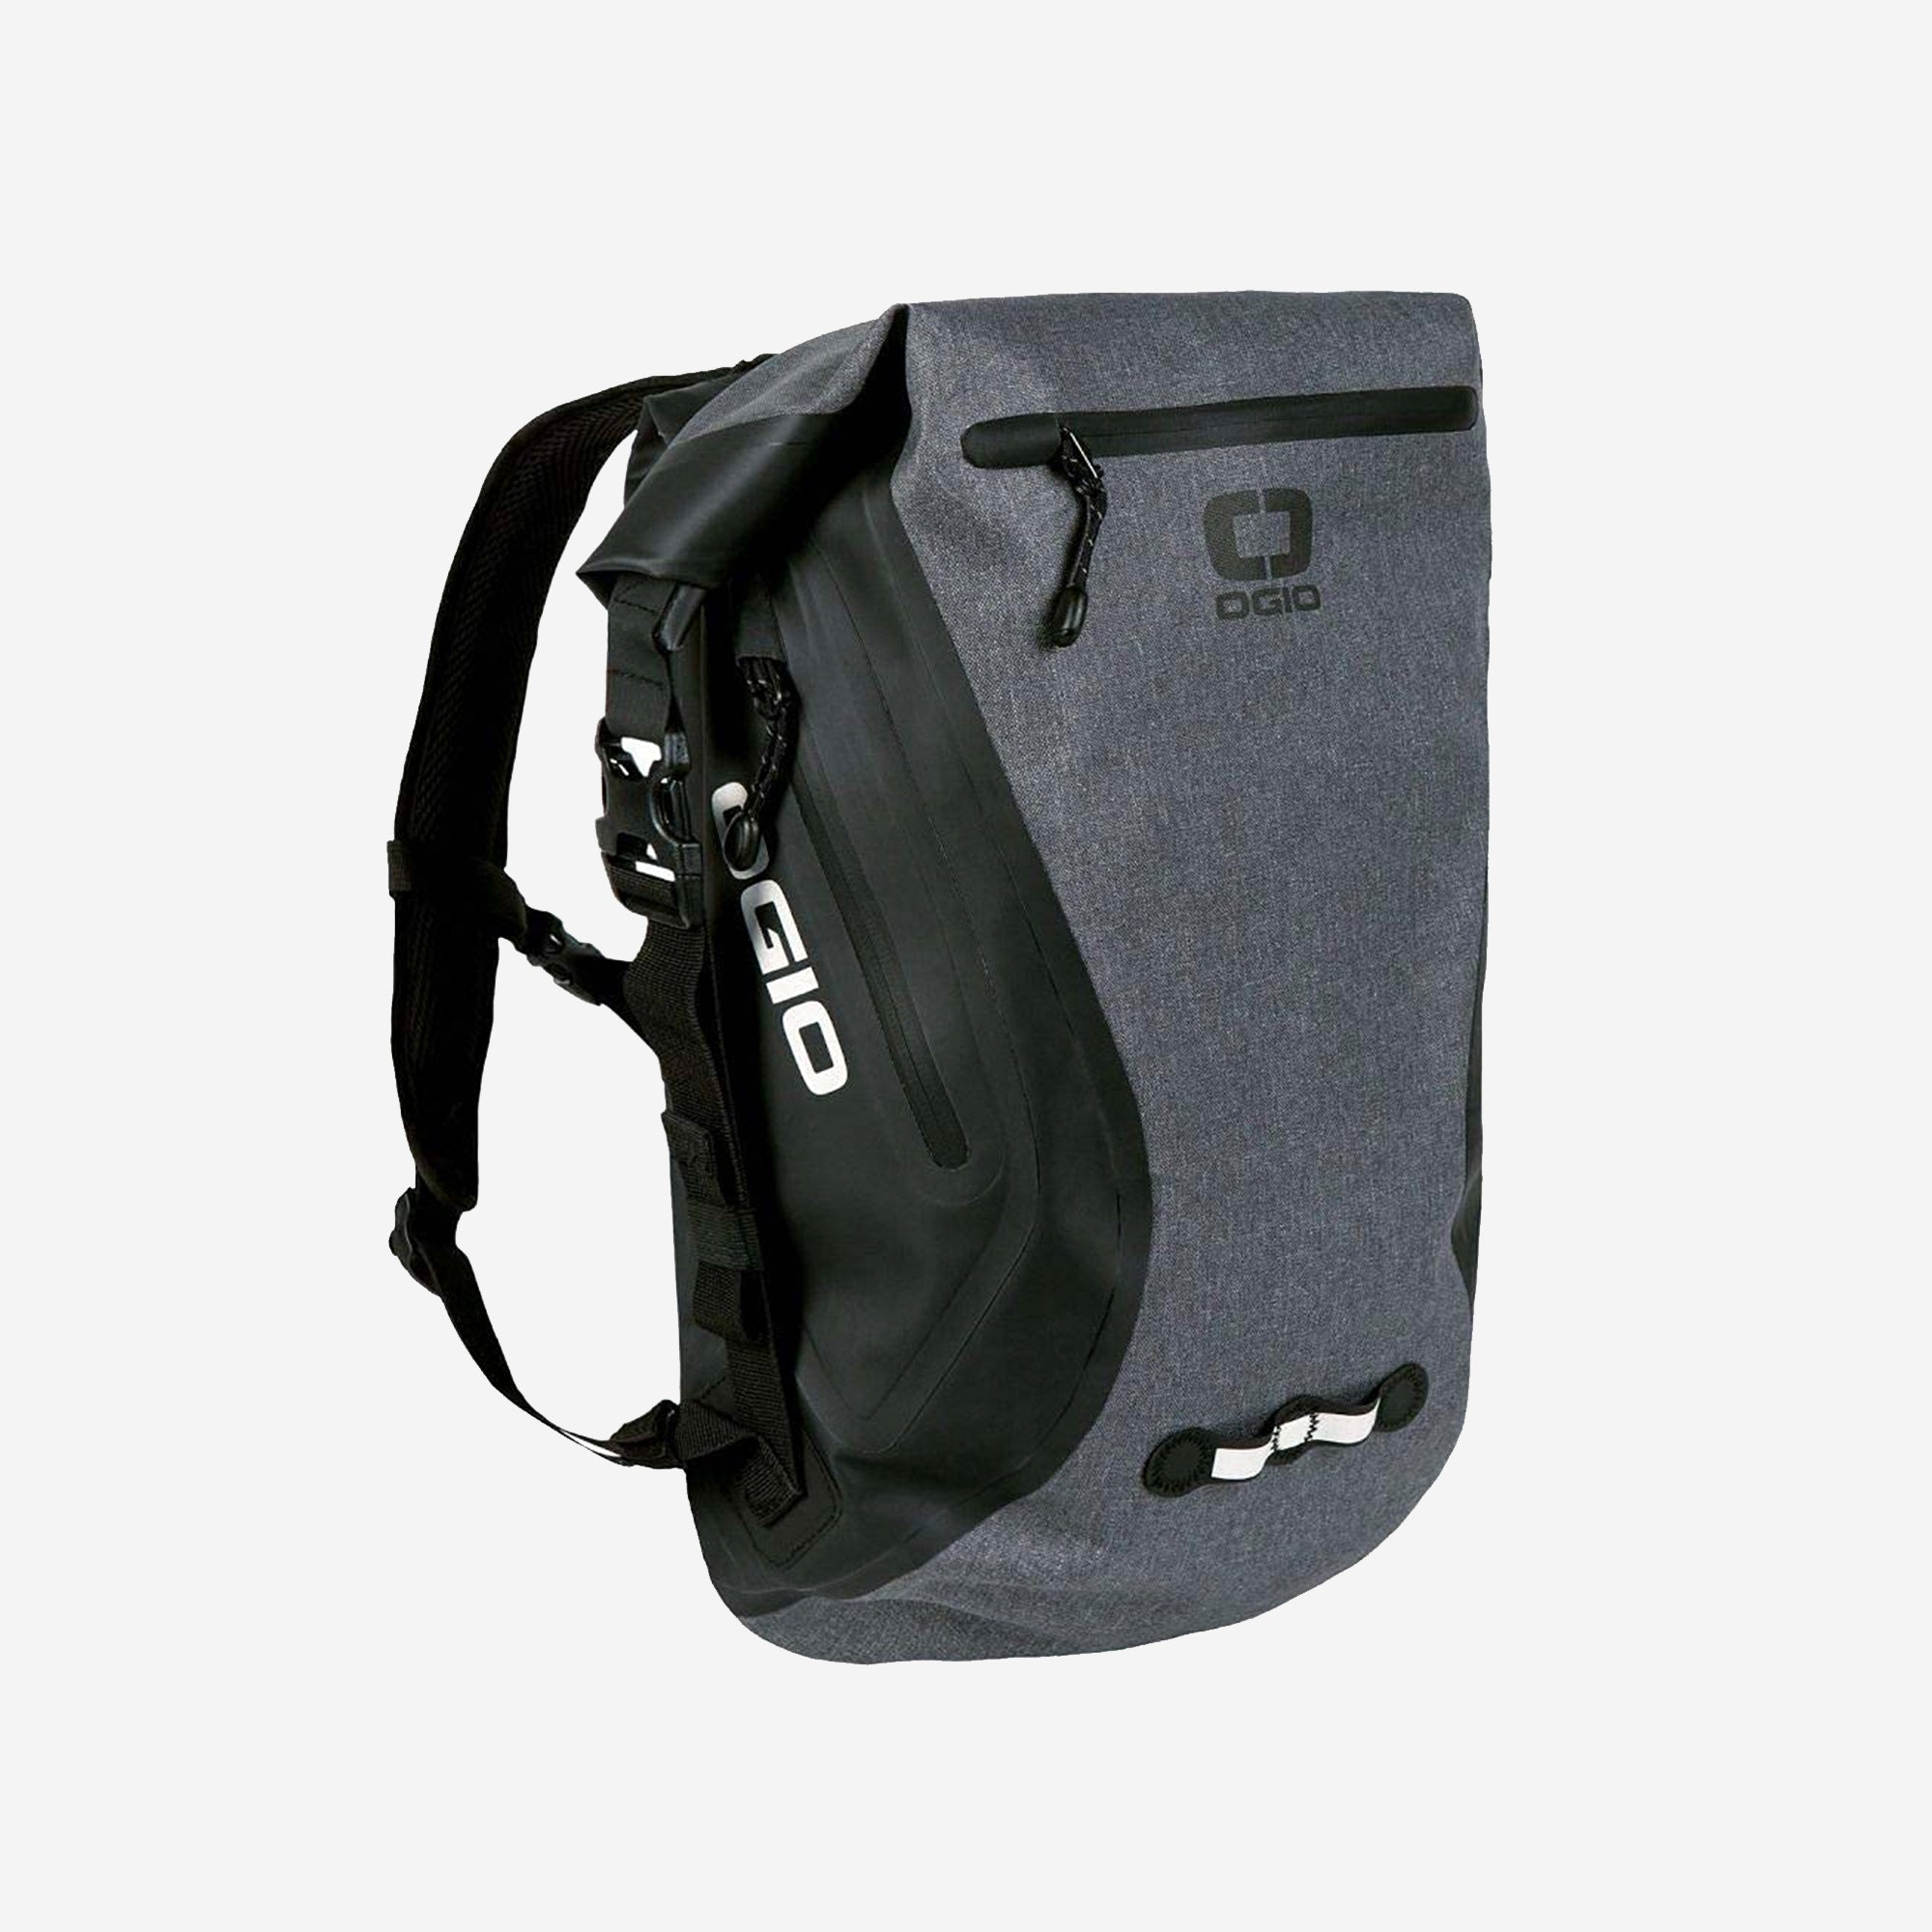 Elements Travel Backpack System by ALPAKA by ALPAKA — Kickstarter